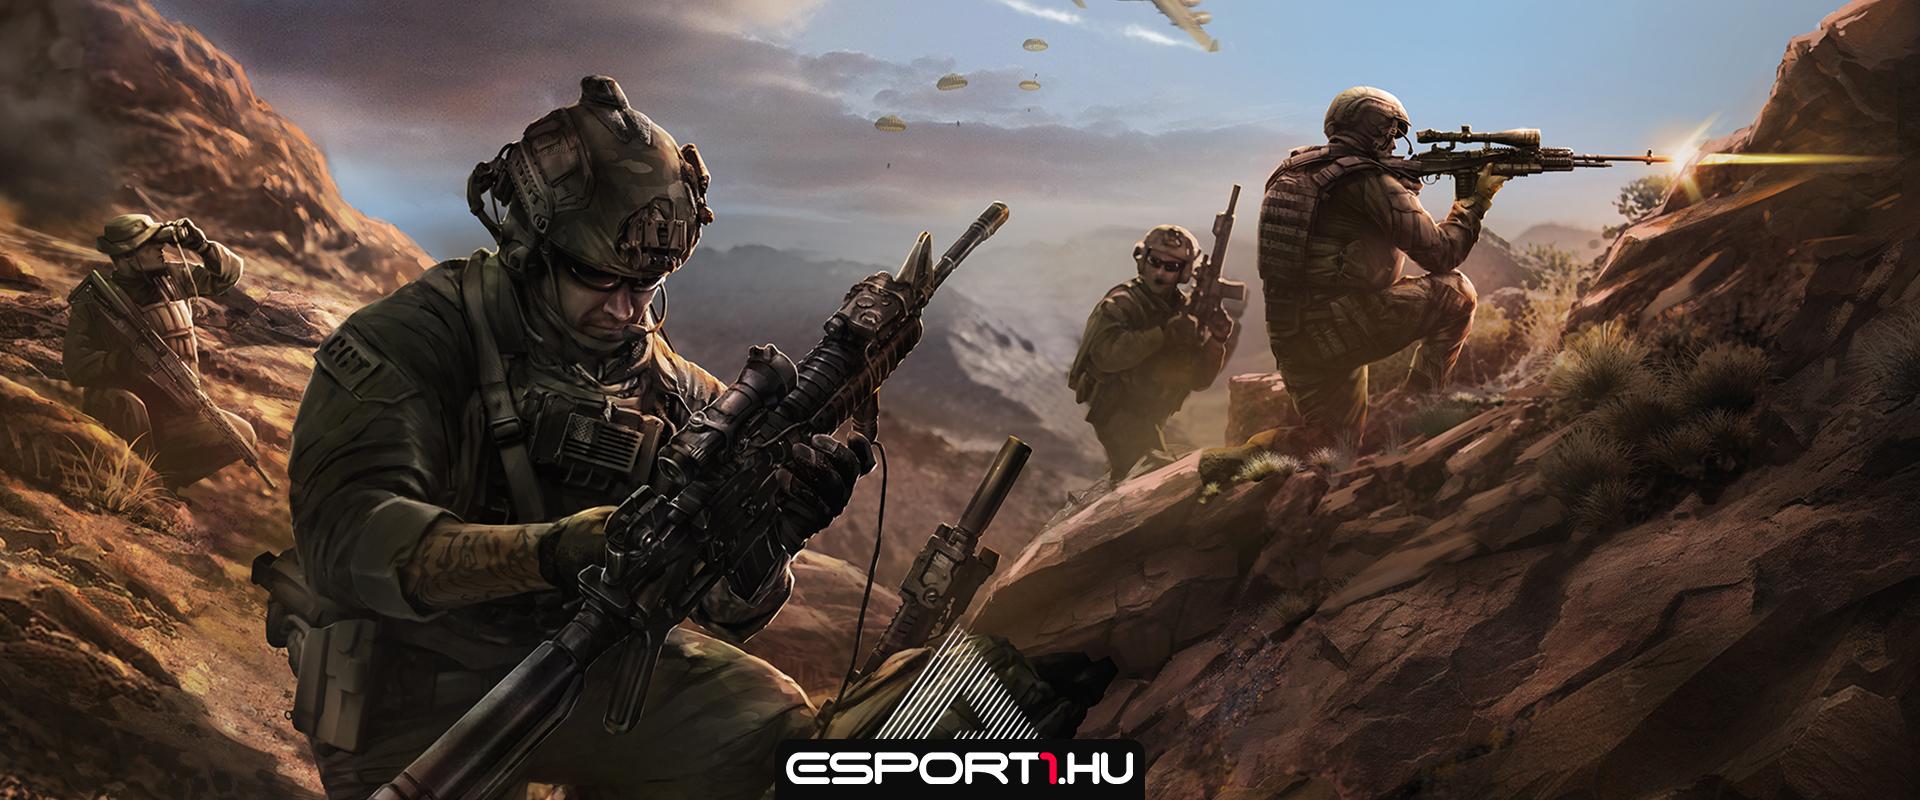 Hivatalos: Bemutatta a mobilos Call of Duty Warzone-t az Activison